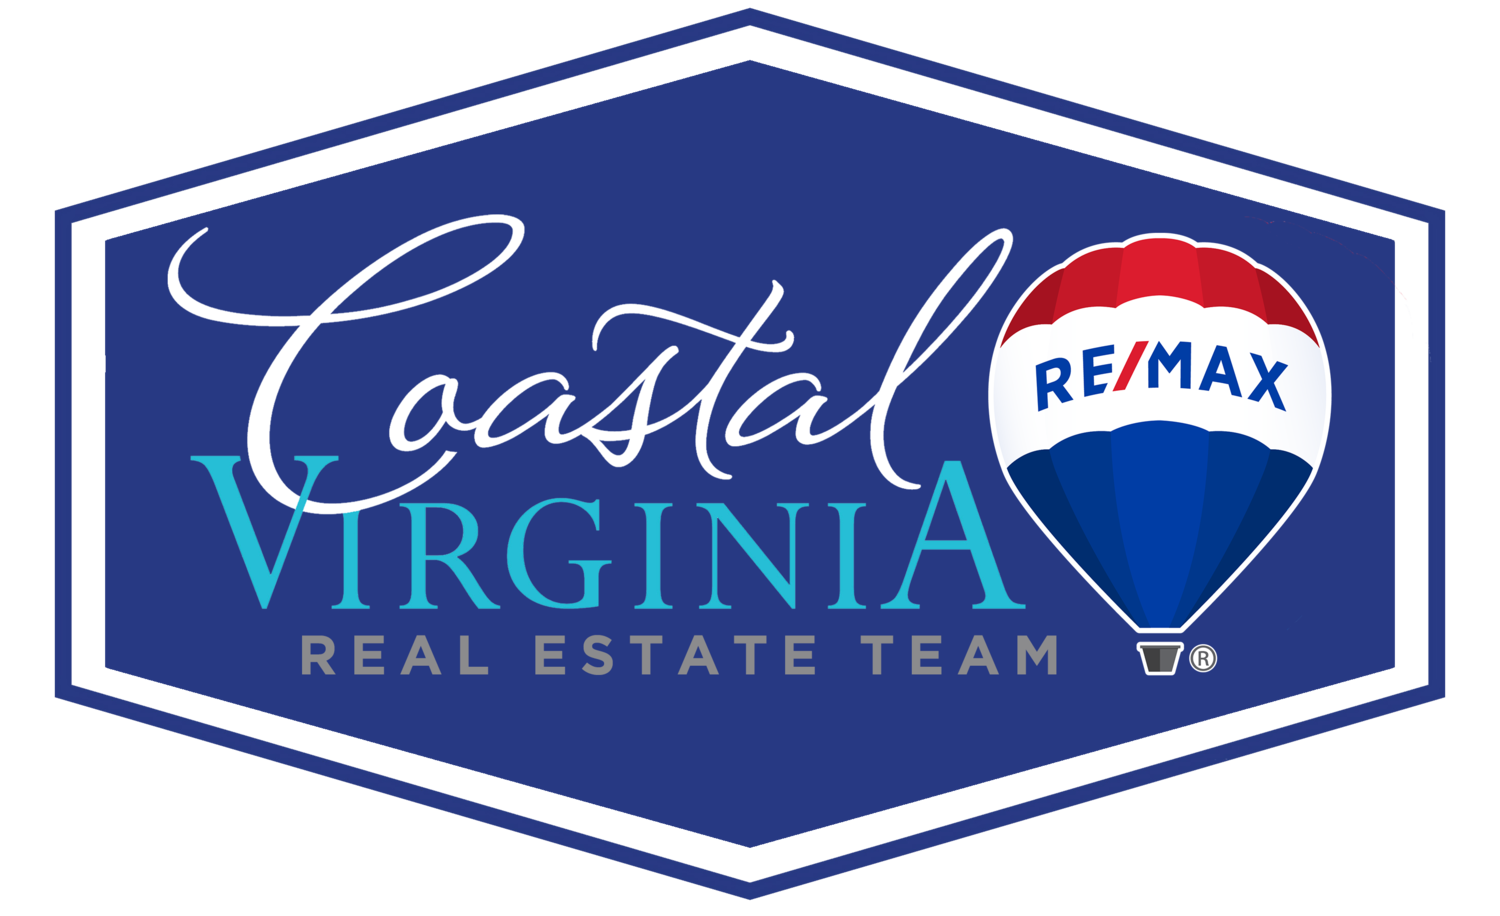  The Coastal VA Real Estate Team